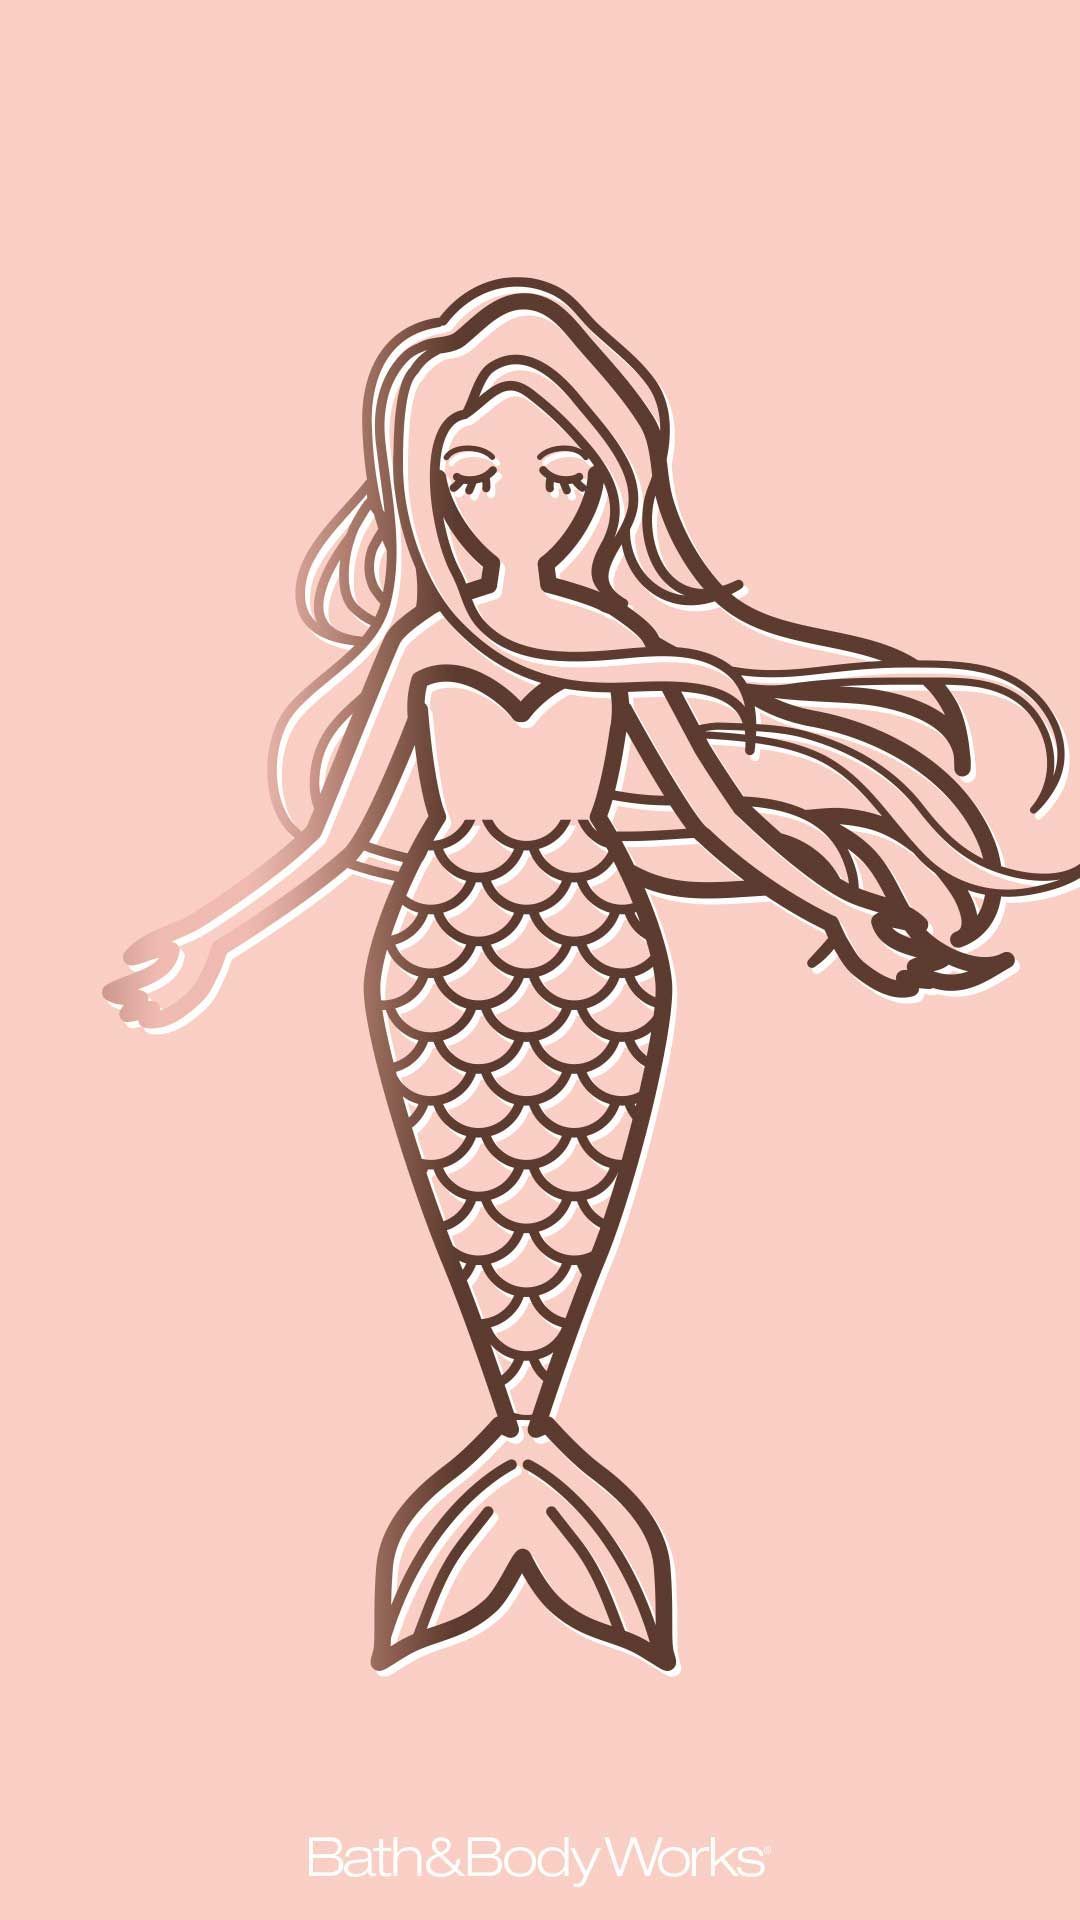 Mermaid iPhone Wallpaper. Mermaid wallpaper, Mermaid, iPhone wallpaper